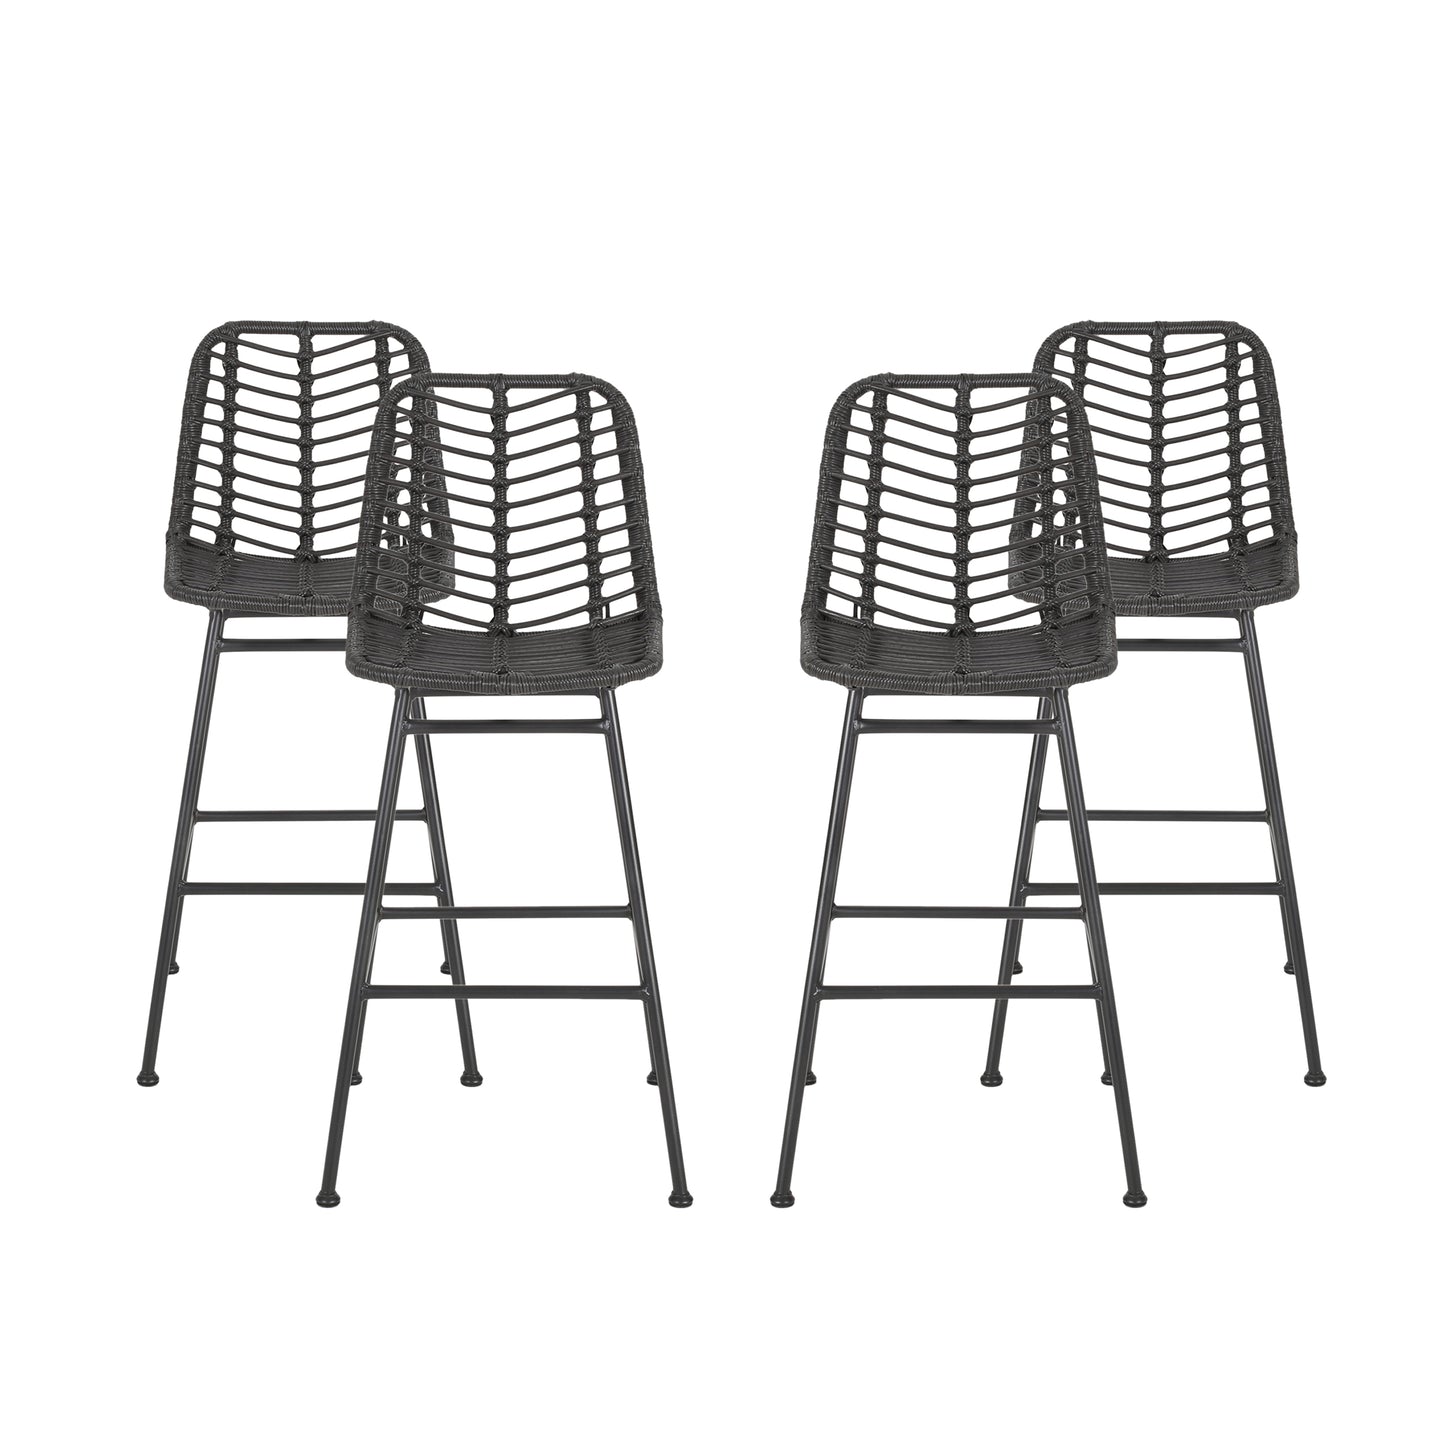 Kendal Outdoor Wicker Barstools (Set of 4)